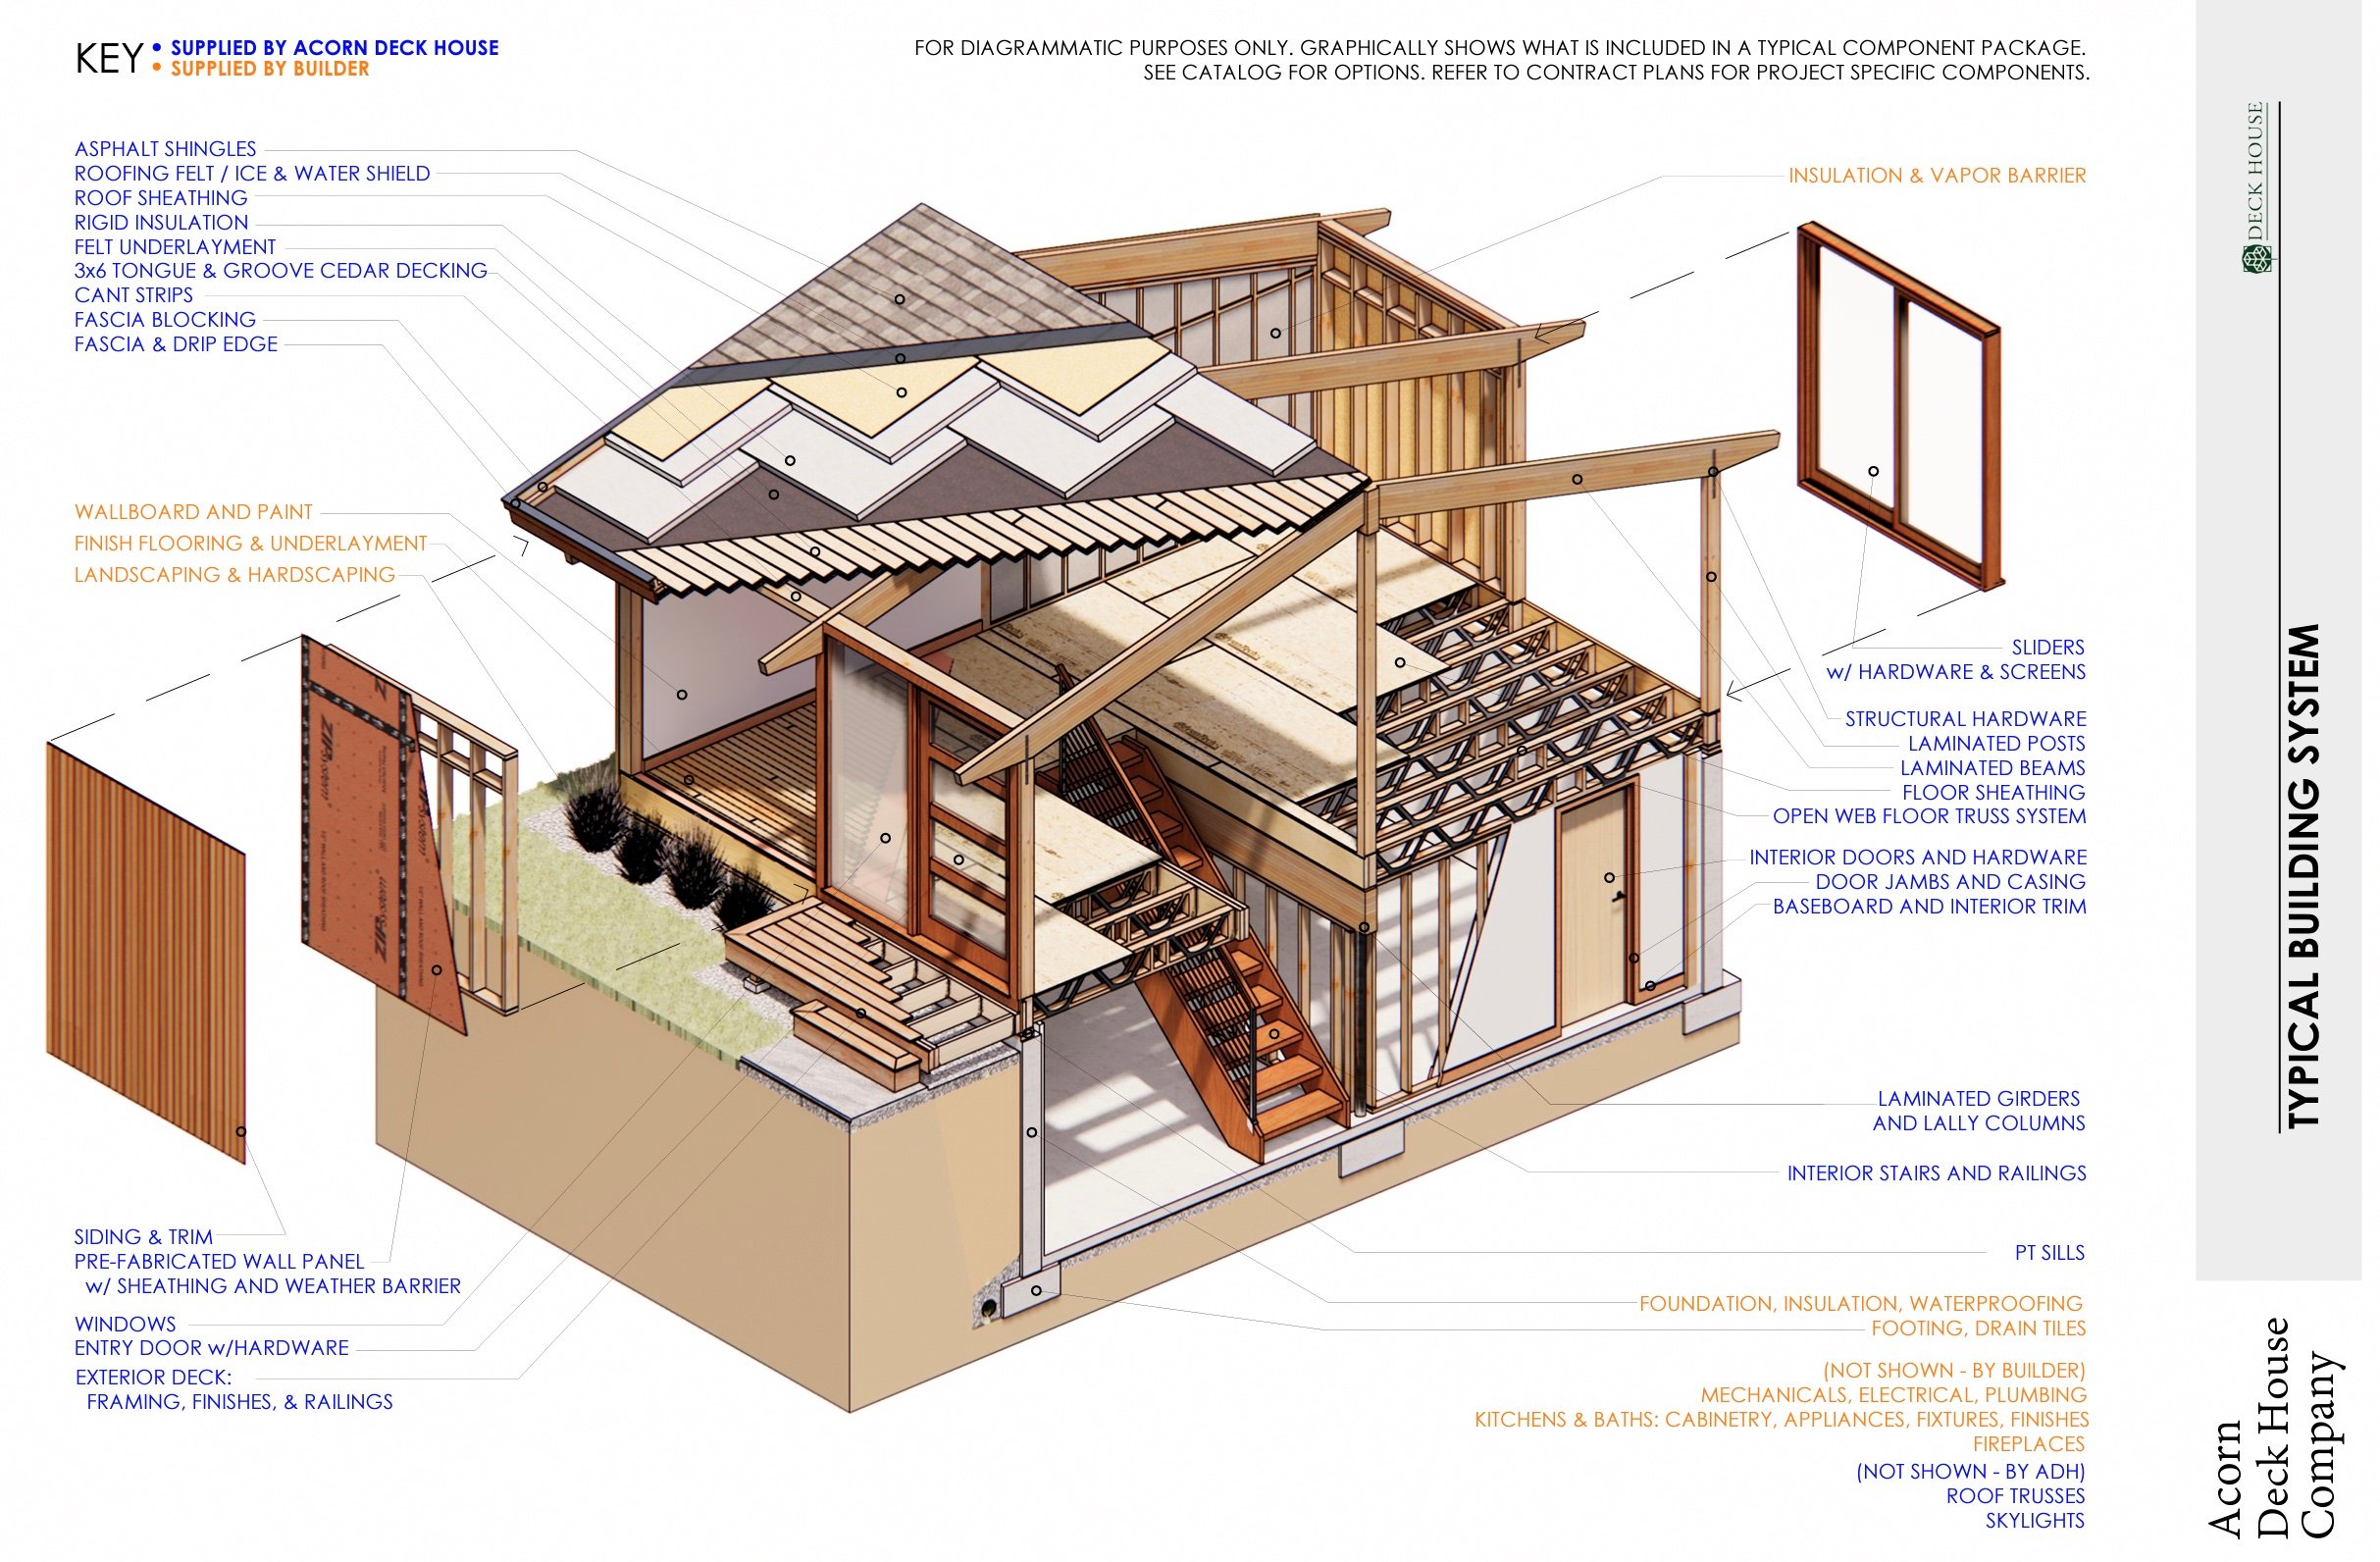 The-Acorn-Deck-House-Building-System